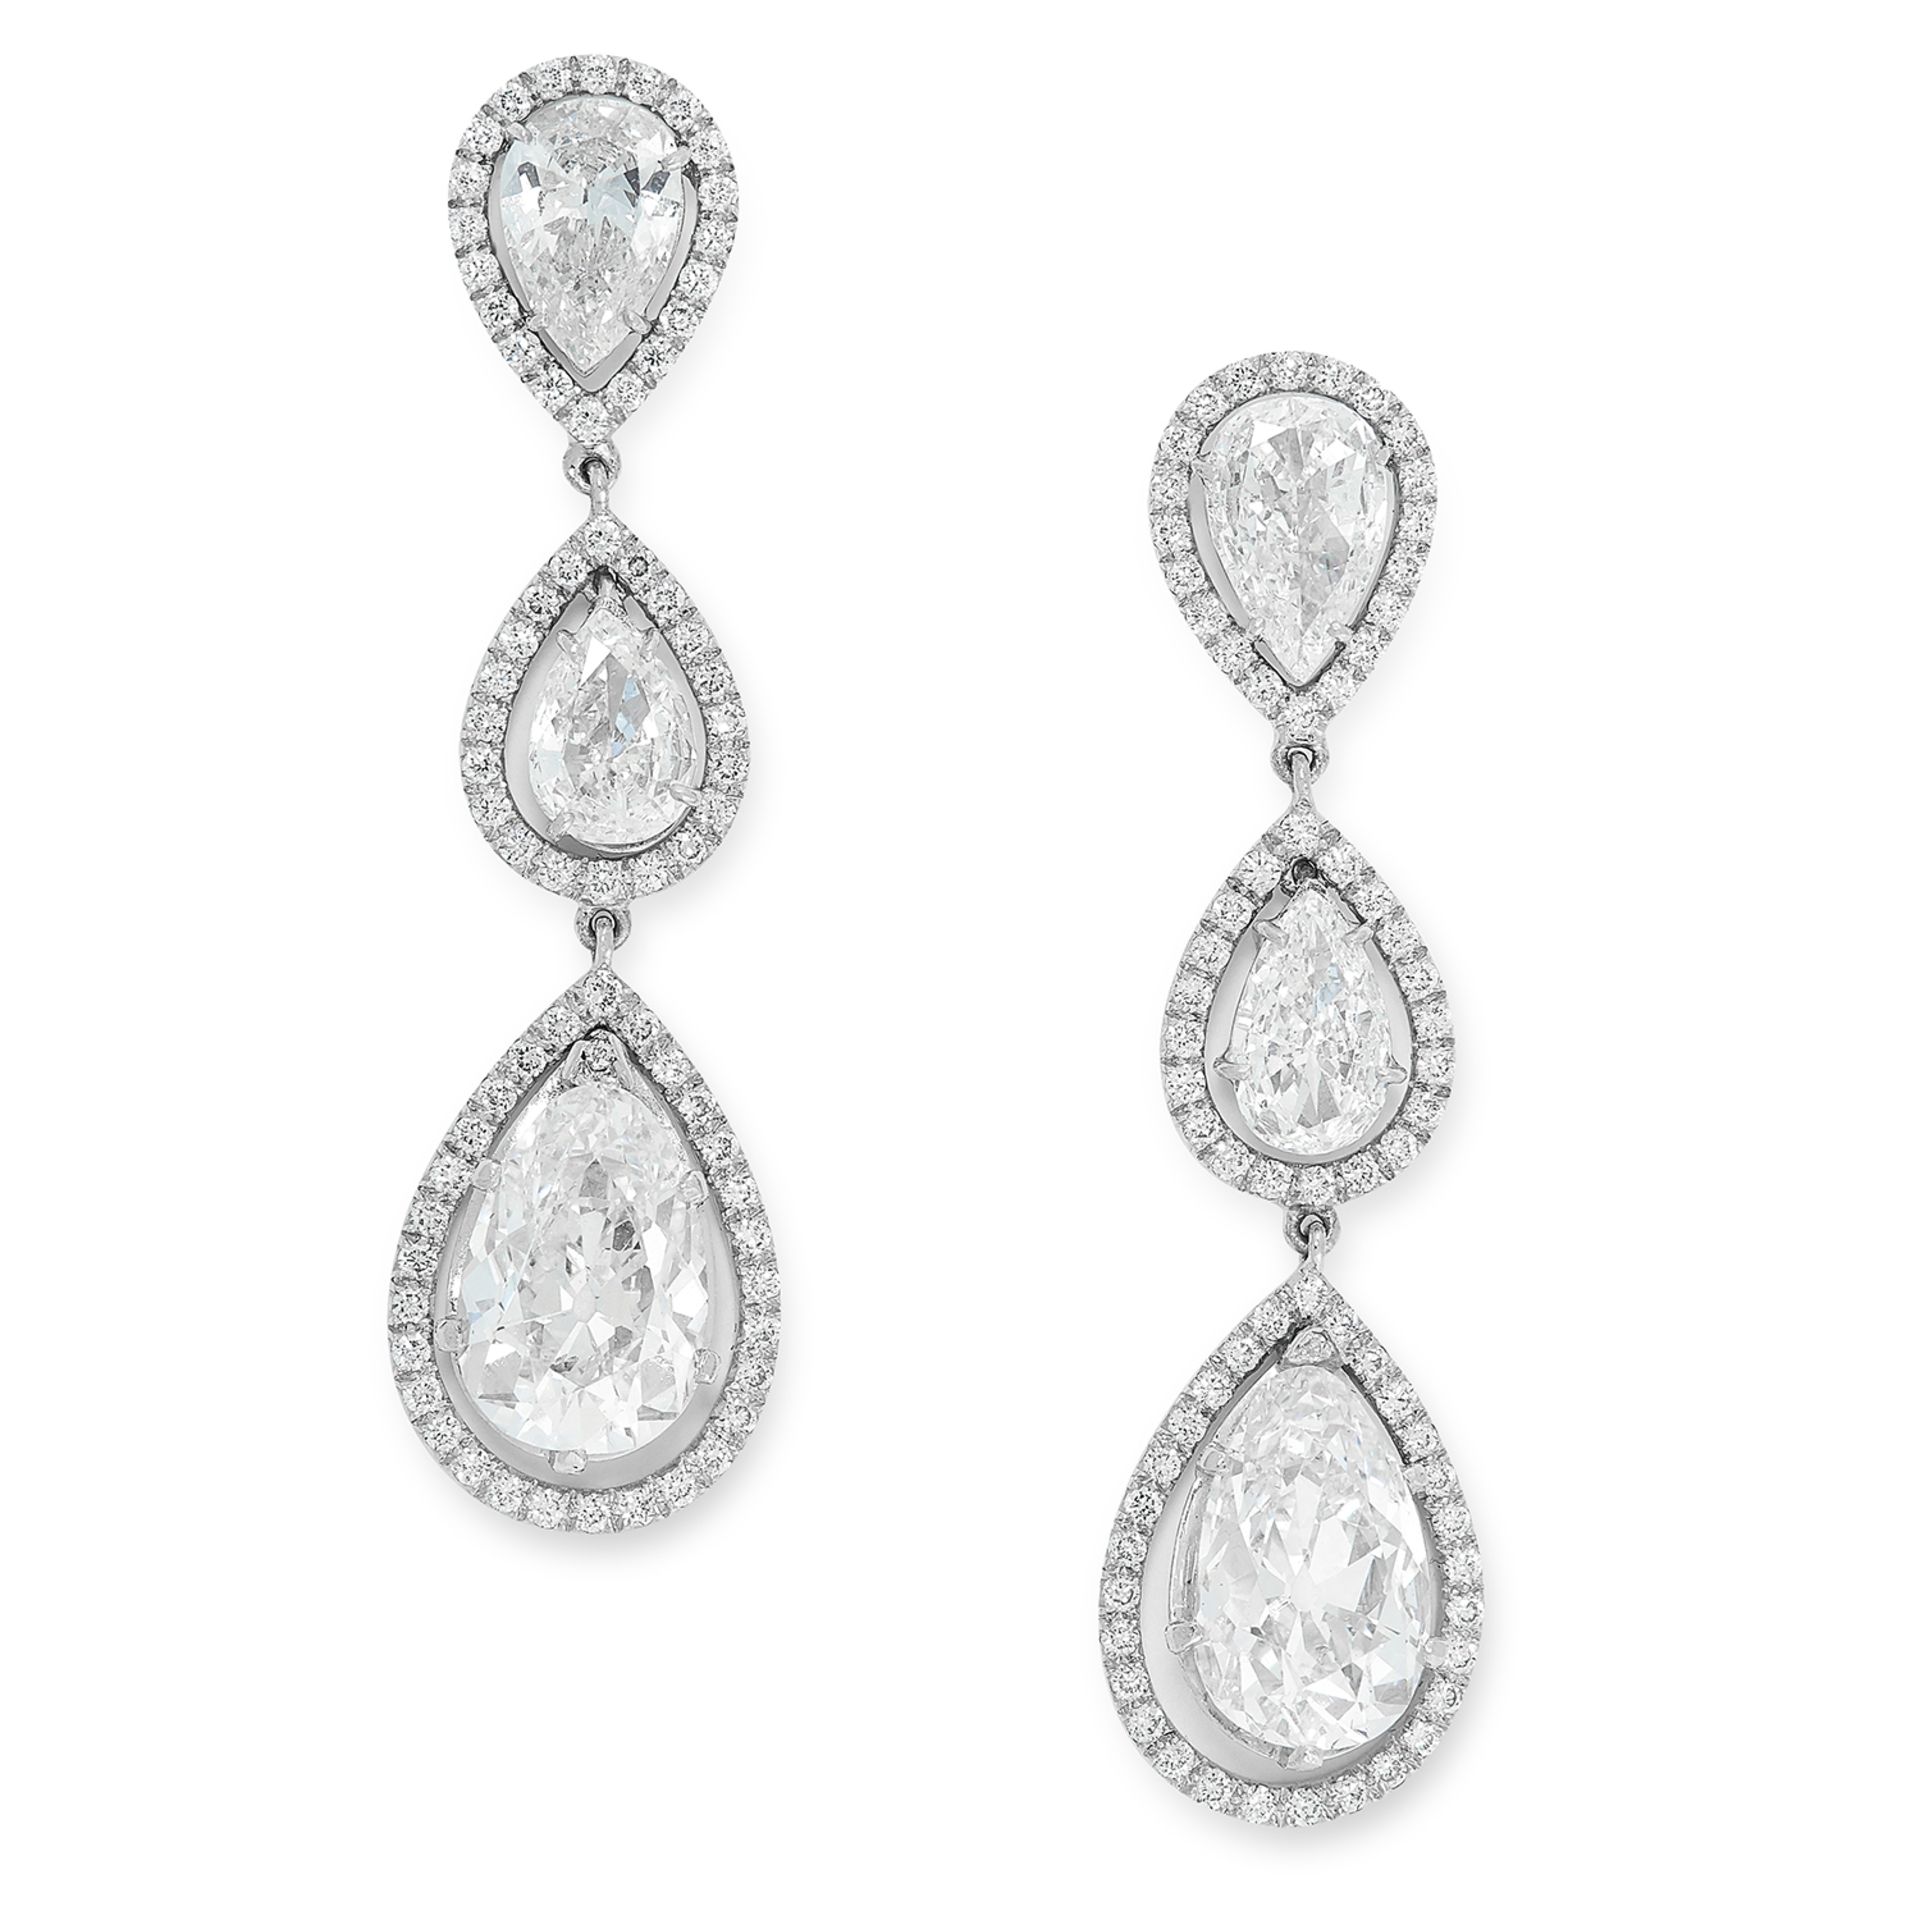 A PAIR OF D COLOUR DIAMOND DROP EARRINGS each designed as a trio of graduated pear cut diamonds